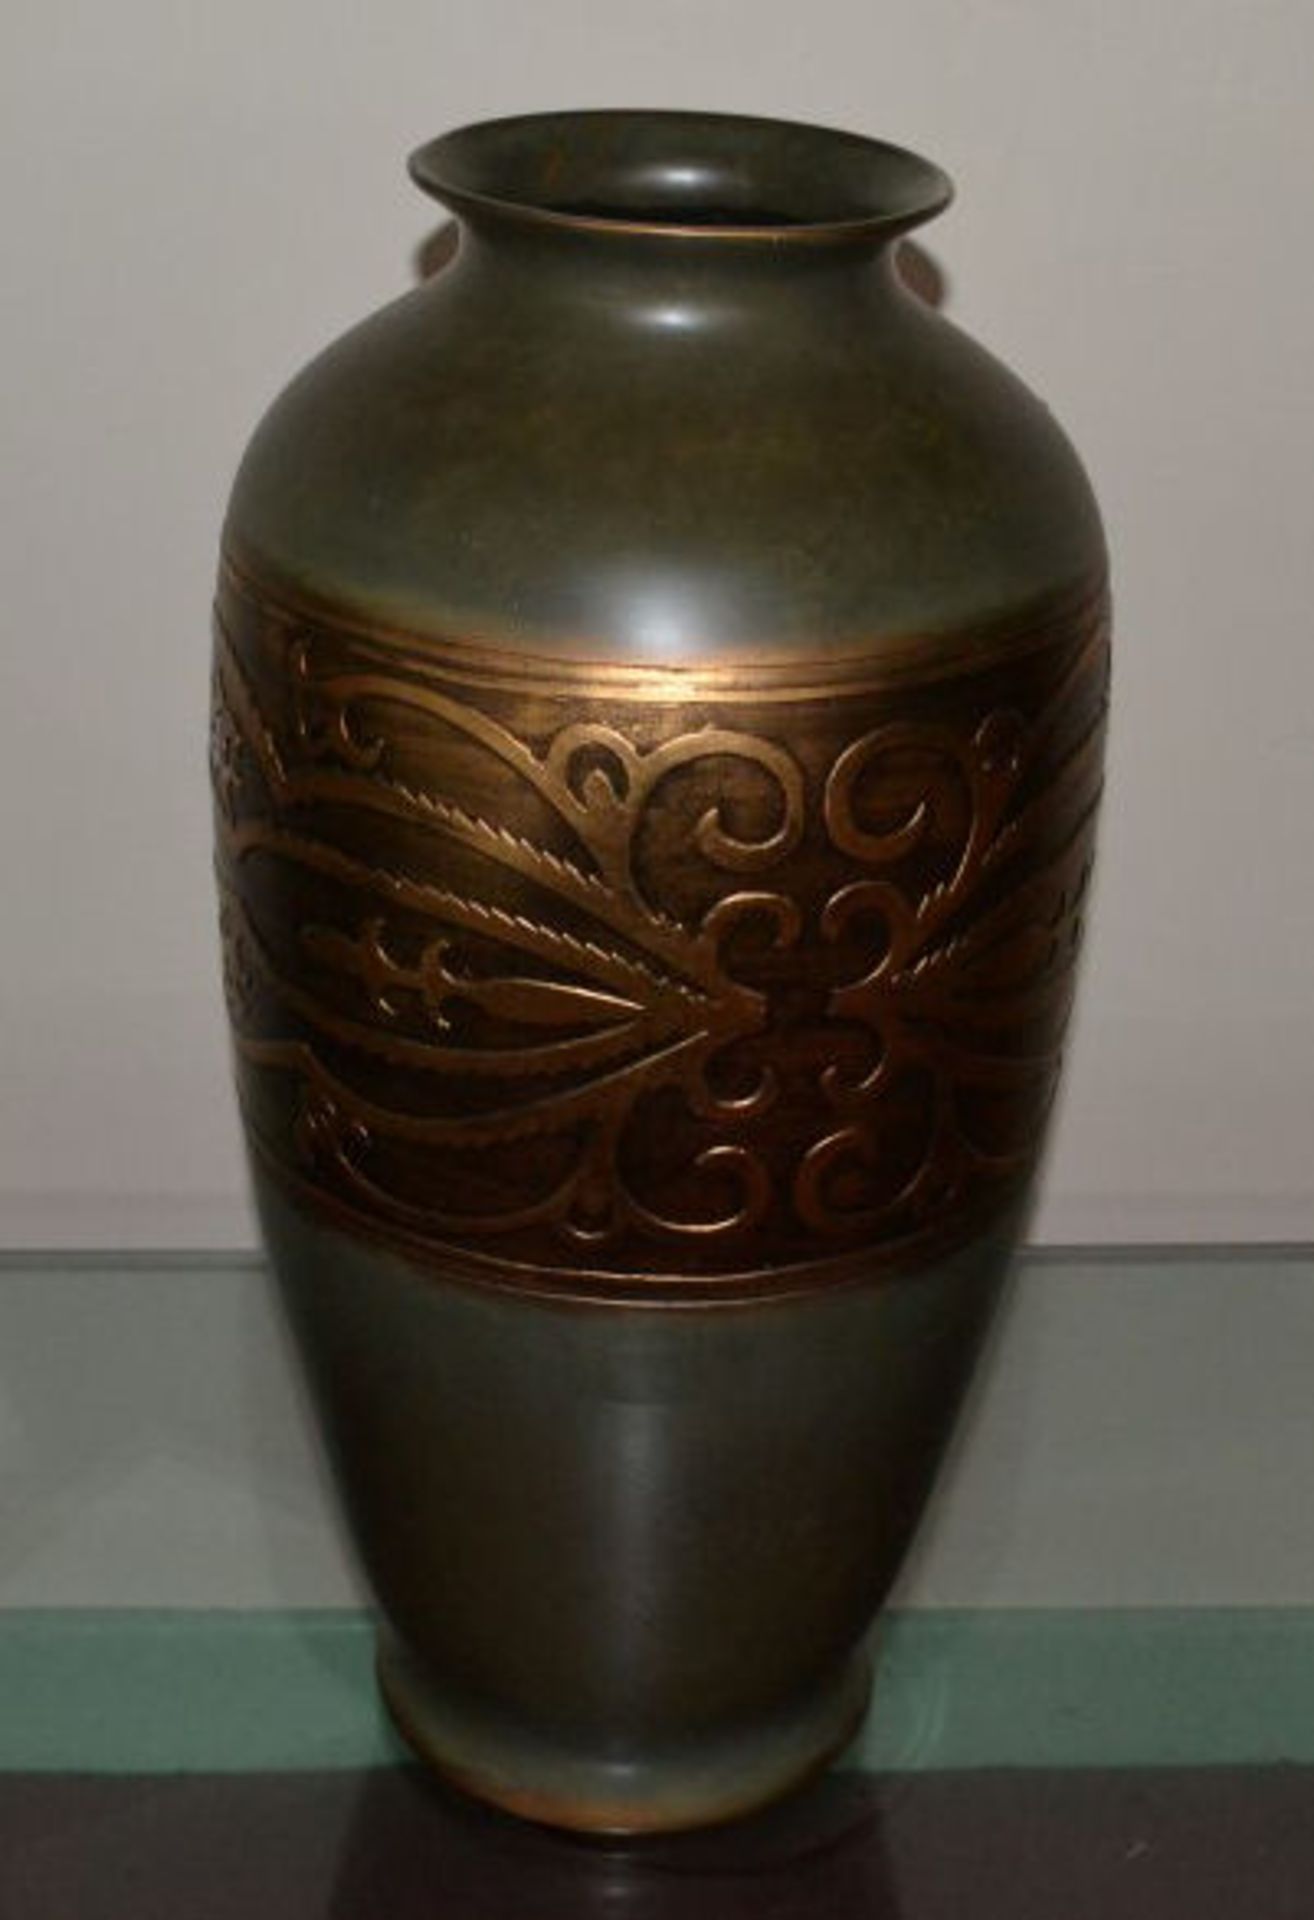 5 Assorted Decorative Vases - See Description For Details - Image 16 of 19